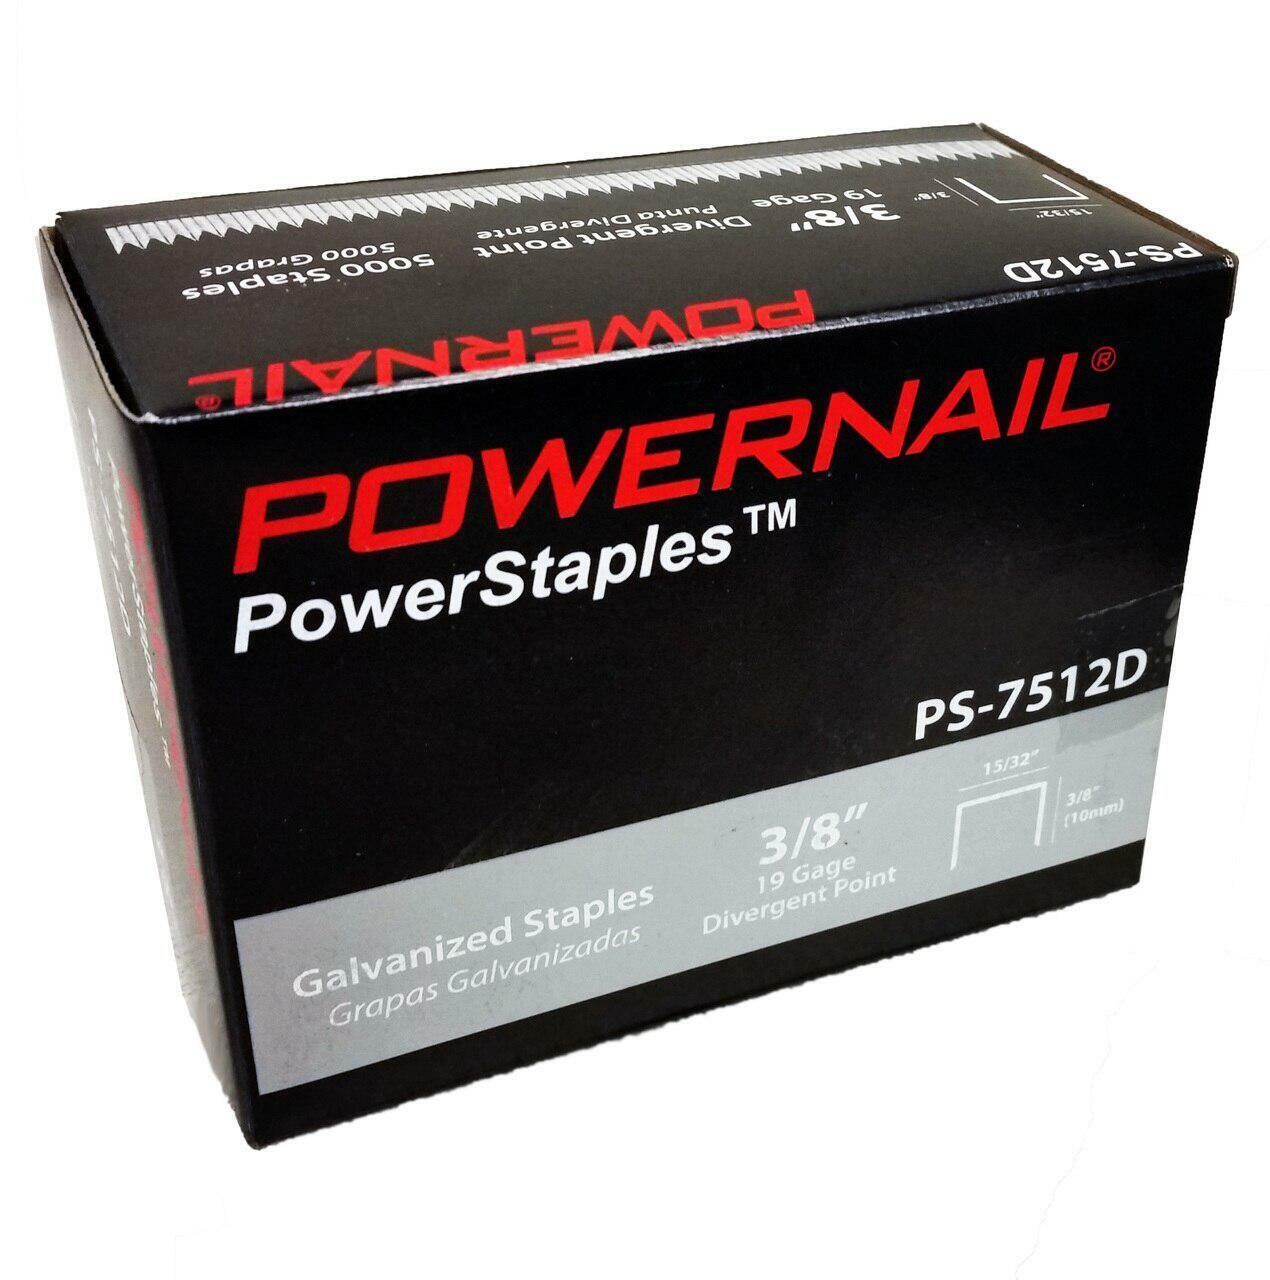 Powernail PS7512D 3-8" Carpet Pad Staples (5,000-box)